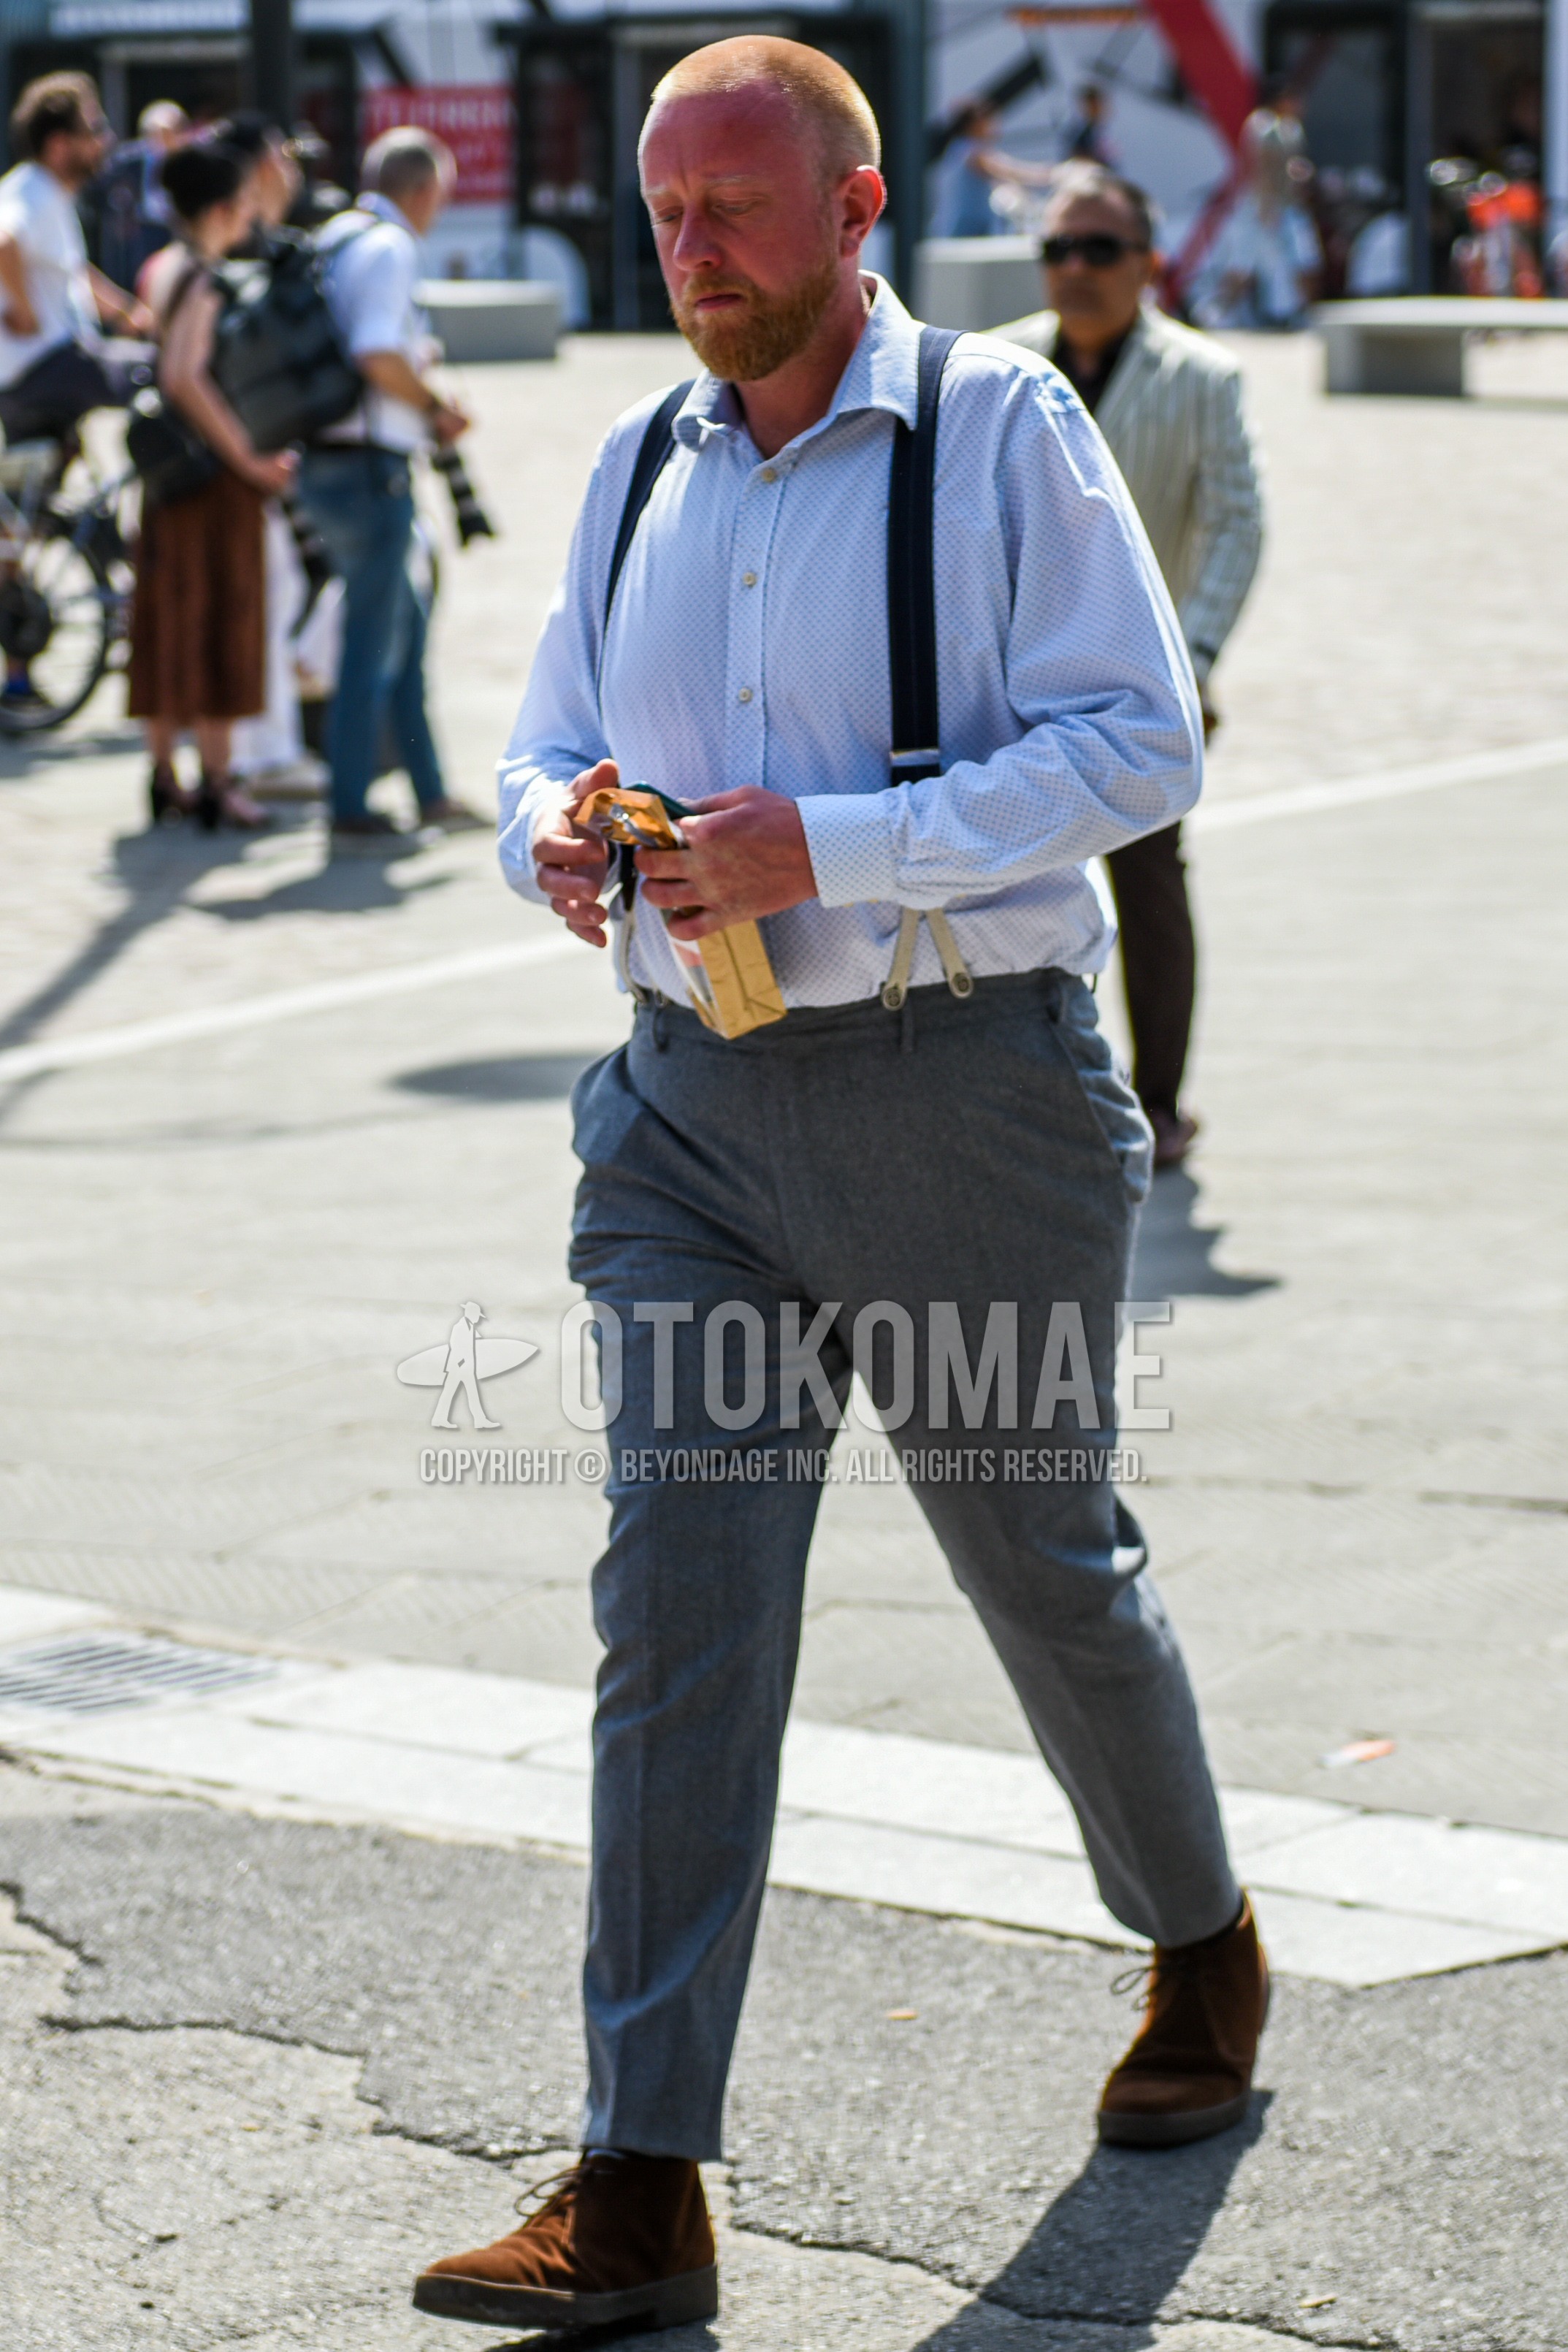 Men's spring summer outfit with white tops/innerwear shirt, black plain suspenders, gray plain slacks, brown chukka boots.